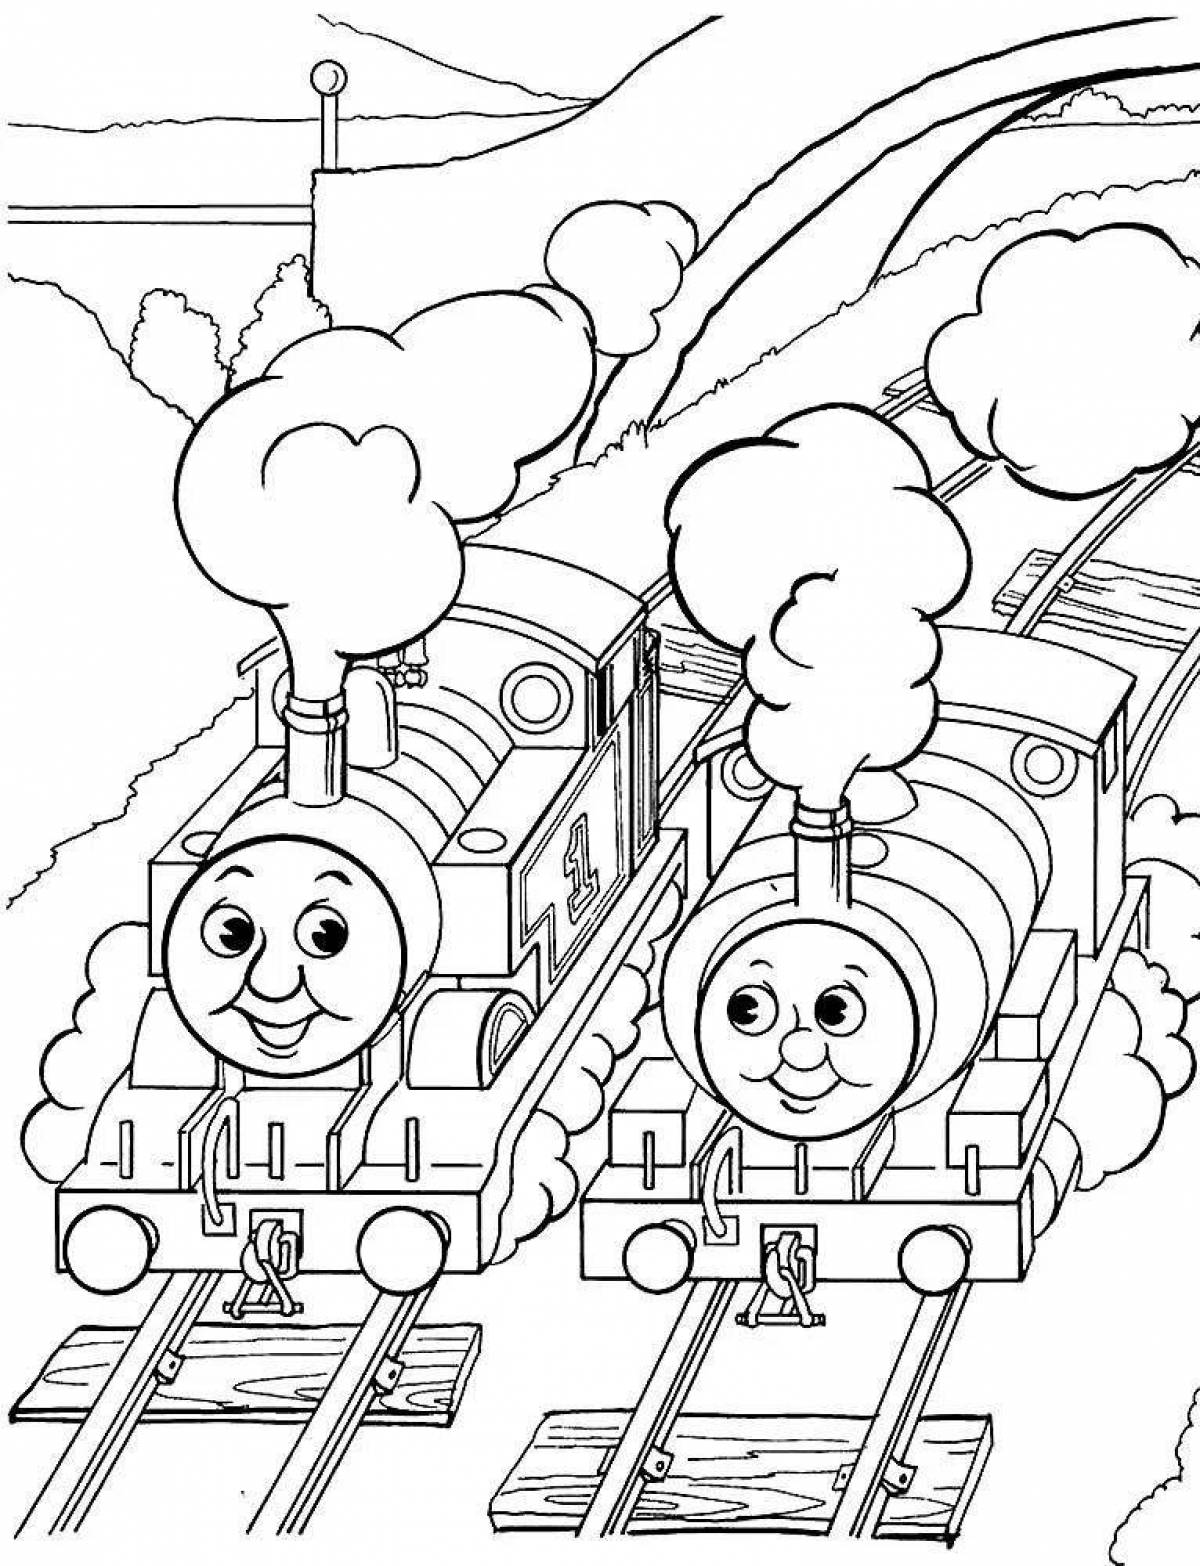 Colorful thomas locomotive coloring page